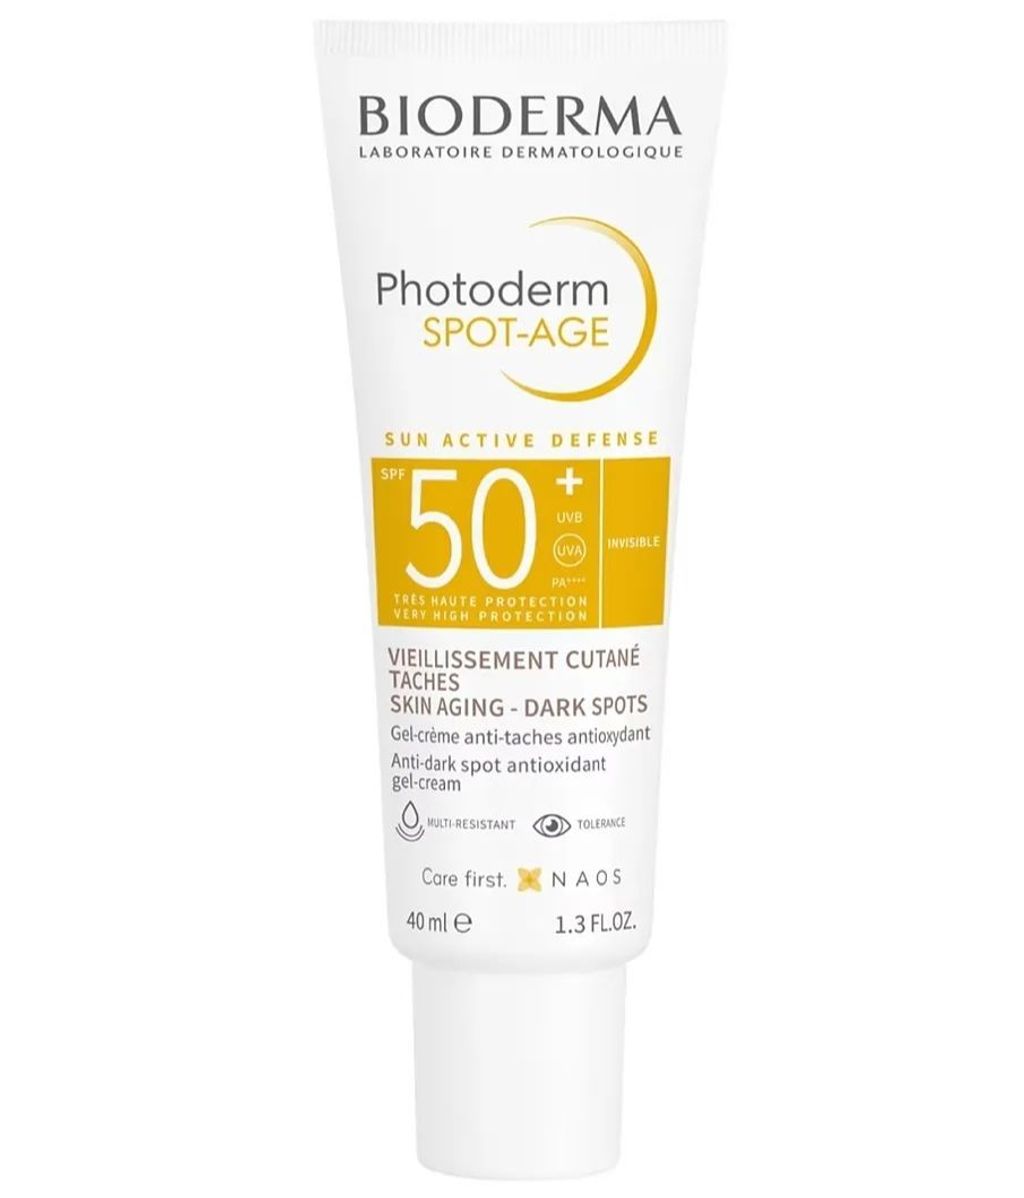 Photoderm Spot Age SPF 50+ de Bioderma